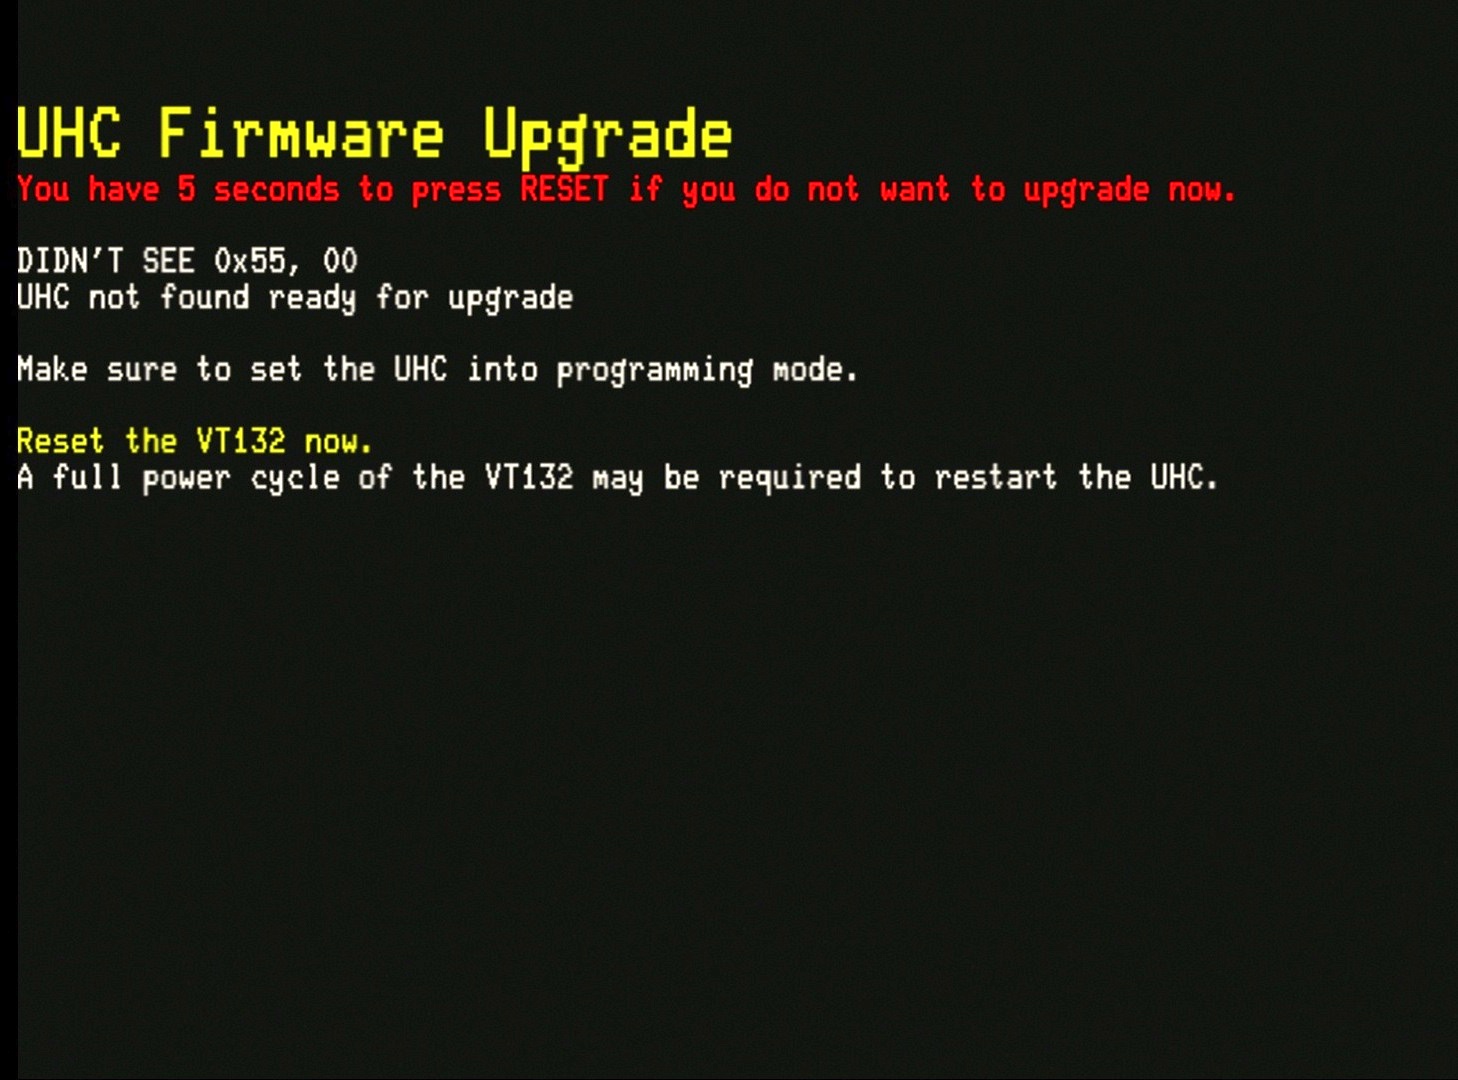 UHC firmware upgrade failure